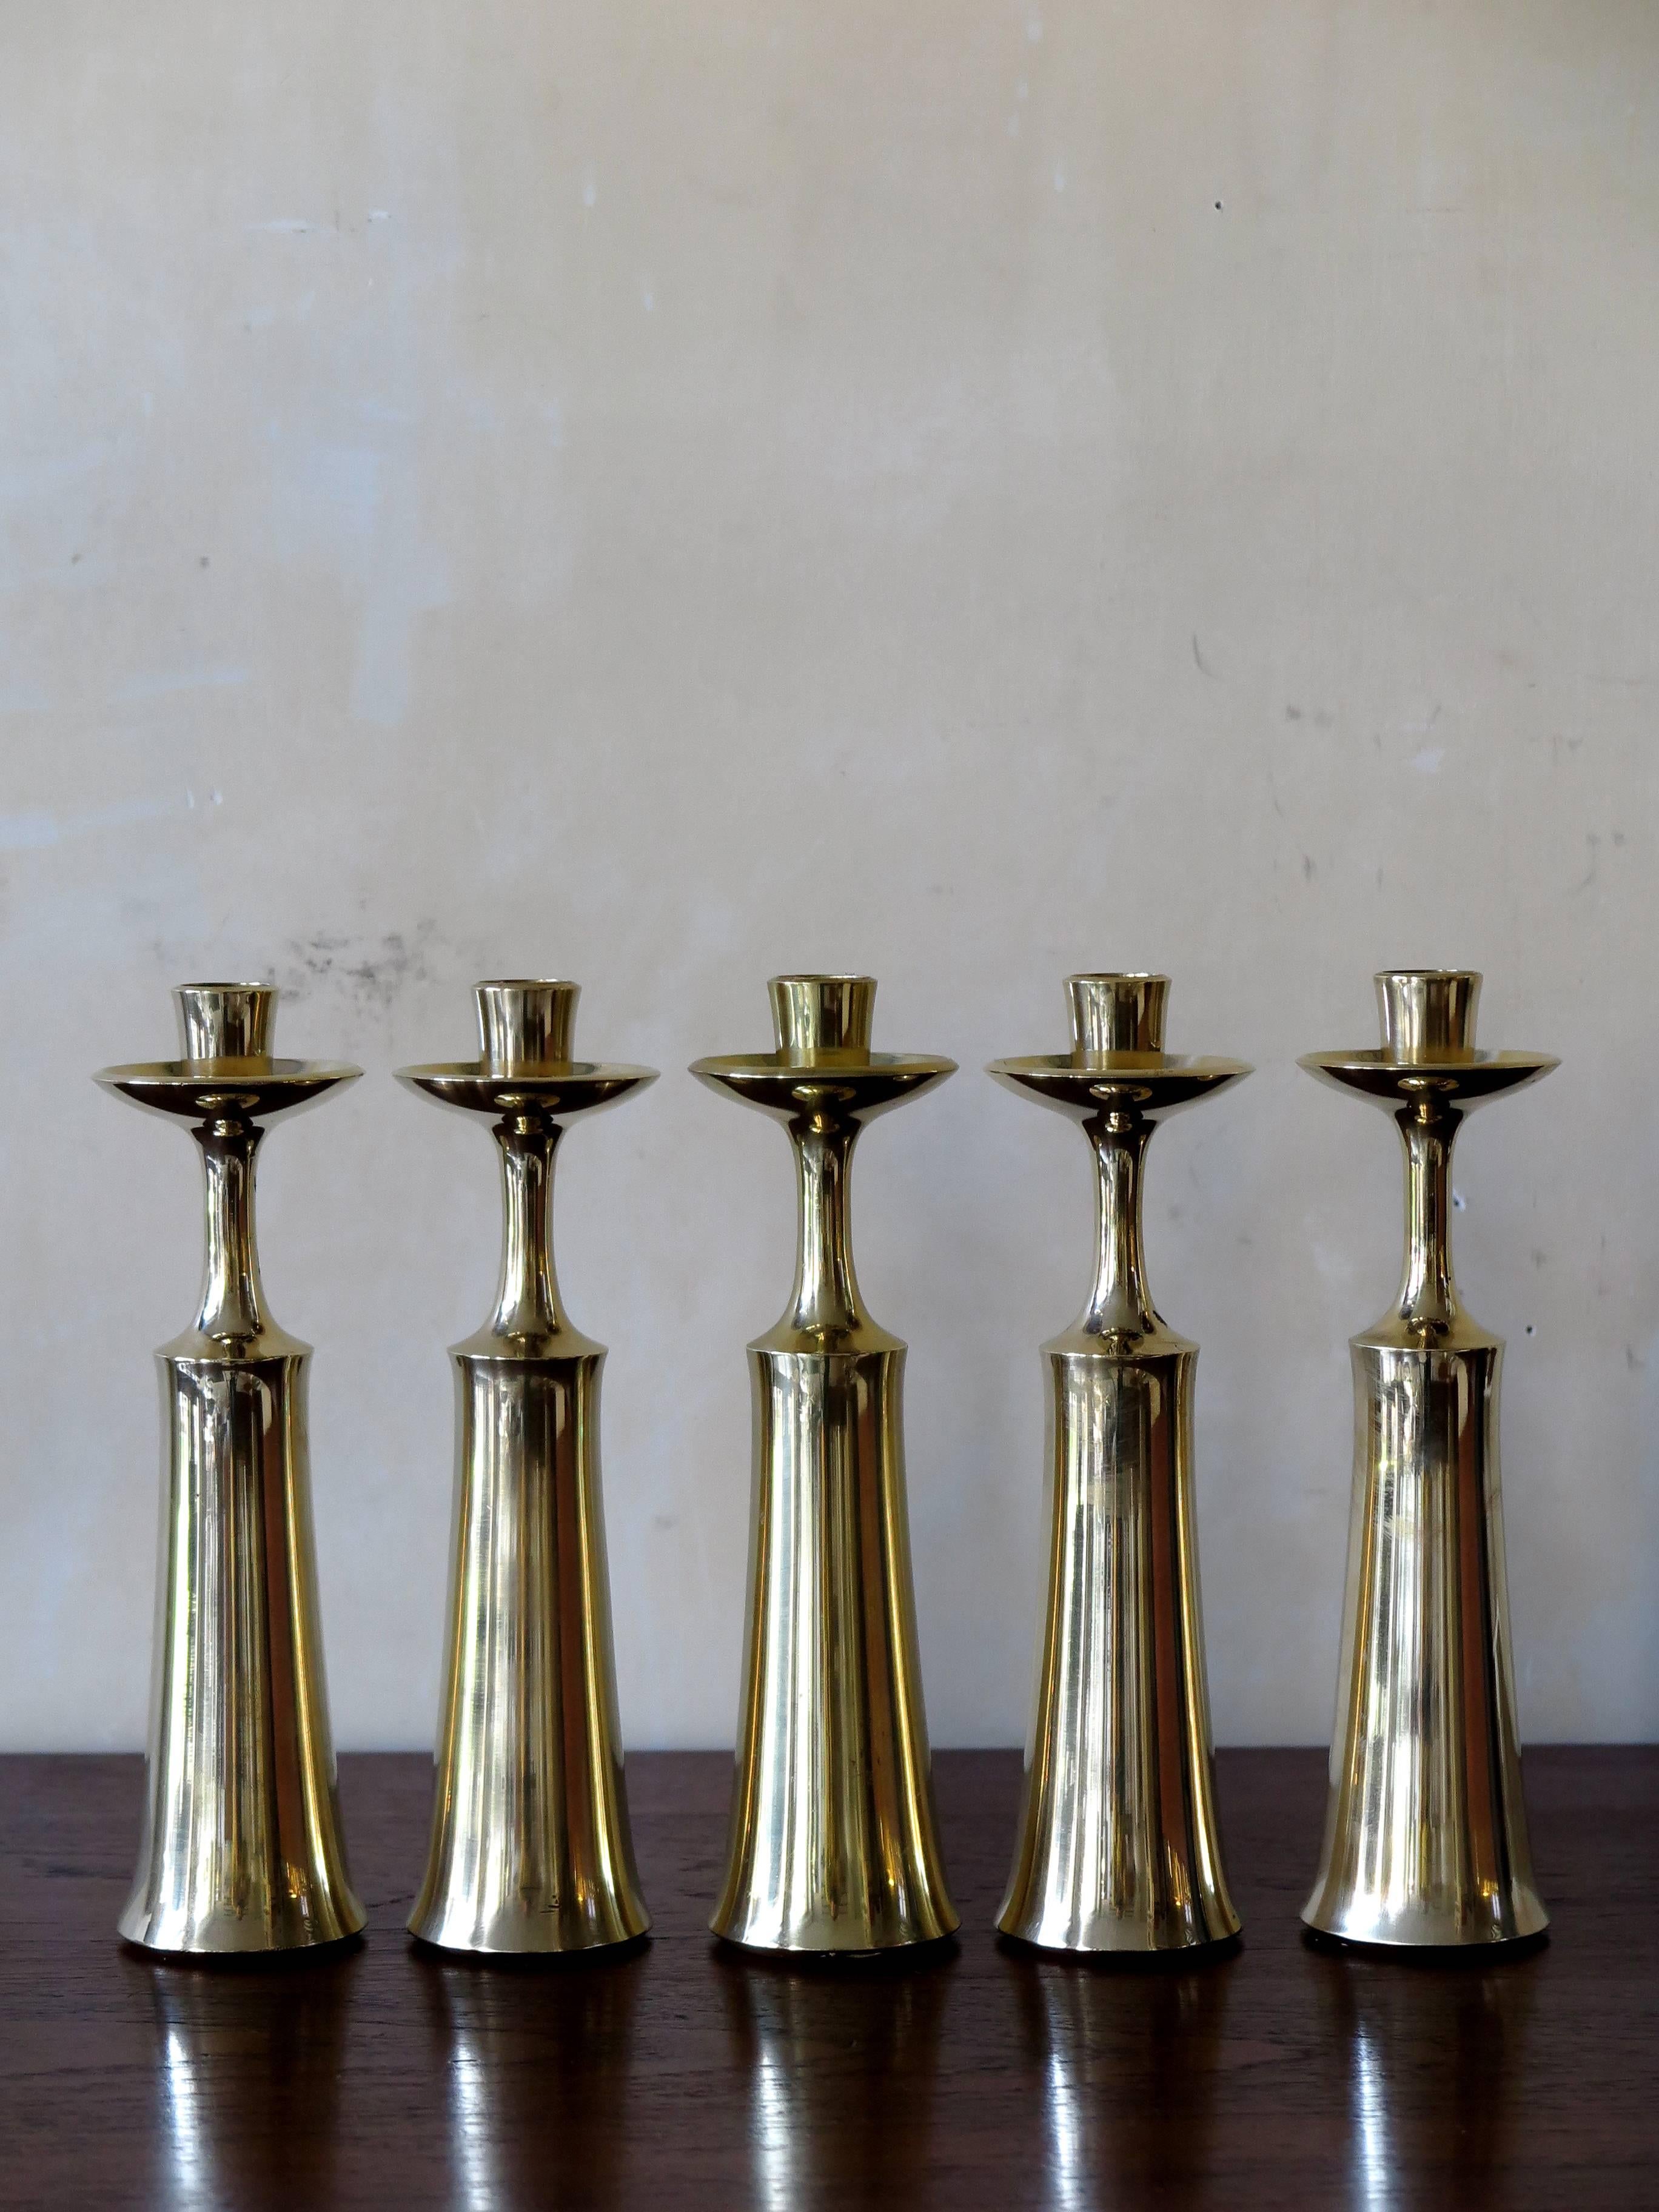 Set of brass Mid-Century Modern candlesticks designed by Jens Harald Quistgaard for Dansk Design, Denmark, circa 1950.